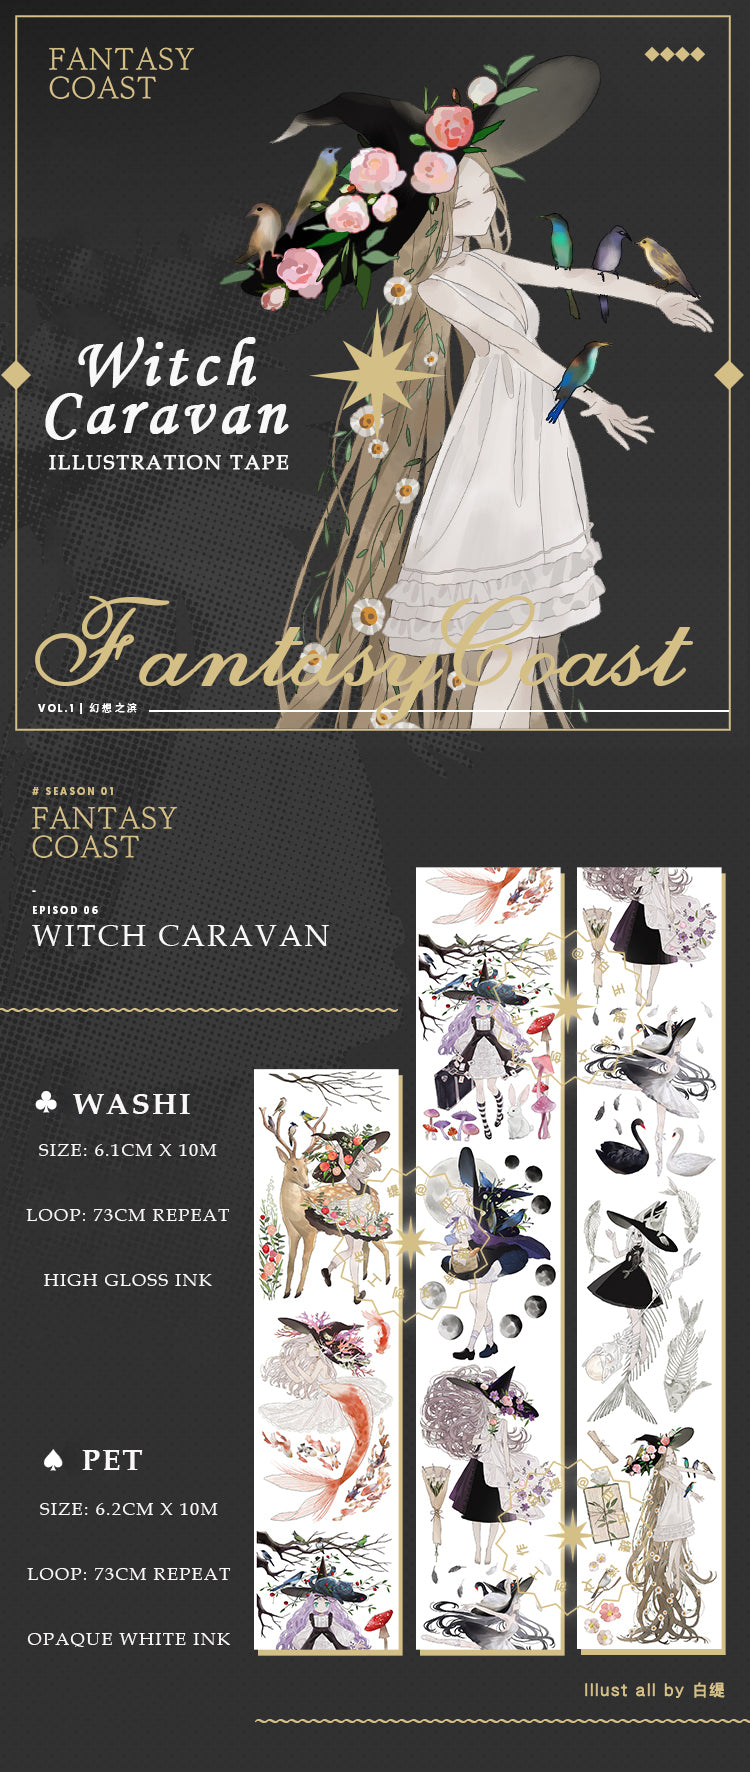 Fantasy Coast Tape Sample: Witch Caravan